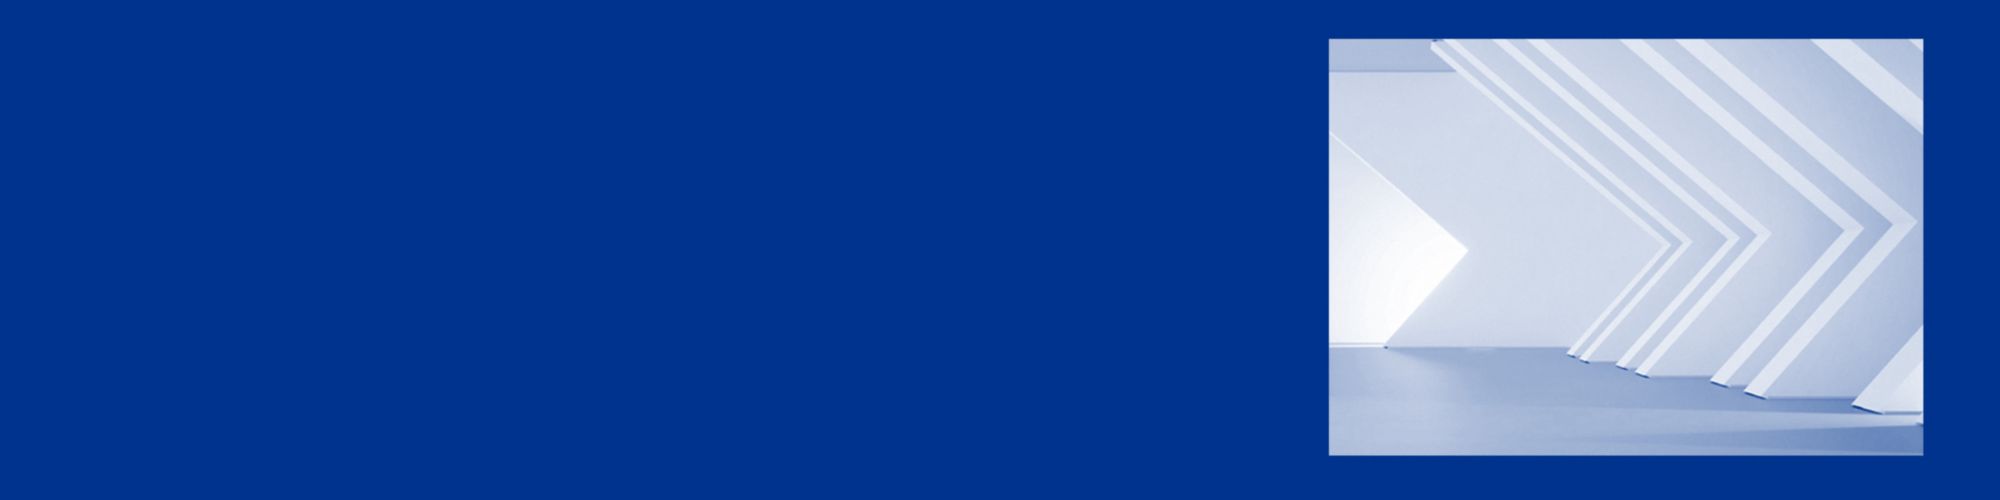 KPMG blue banner